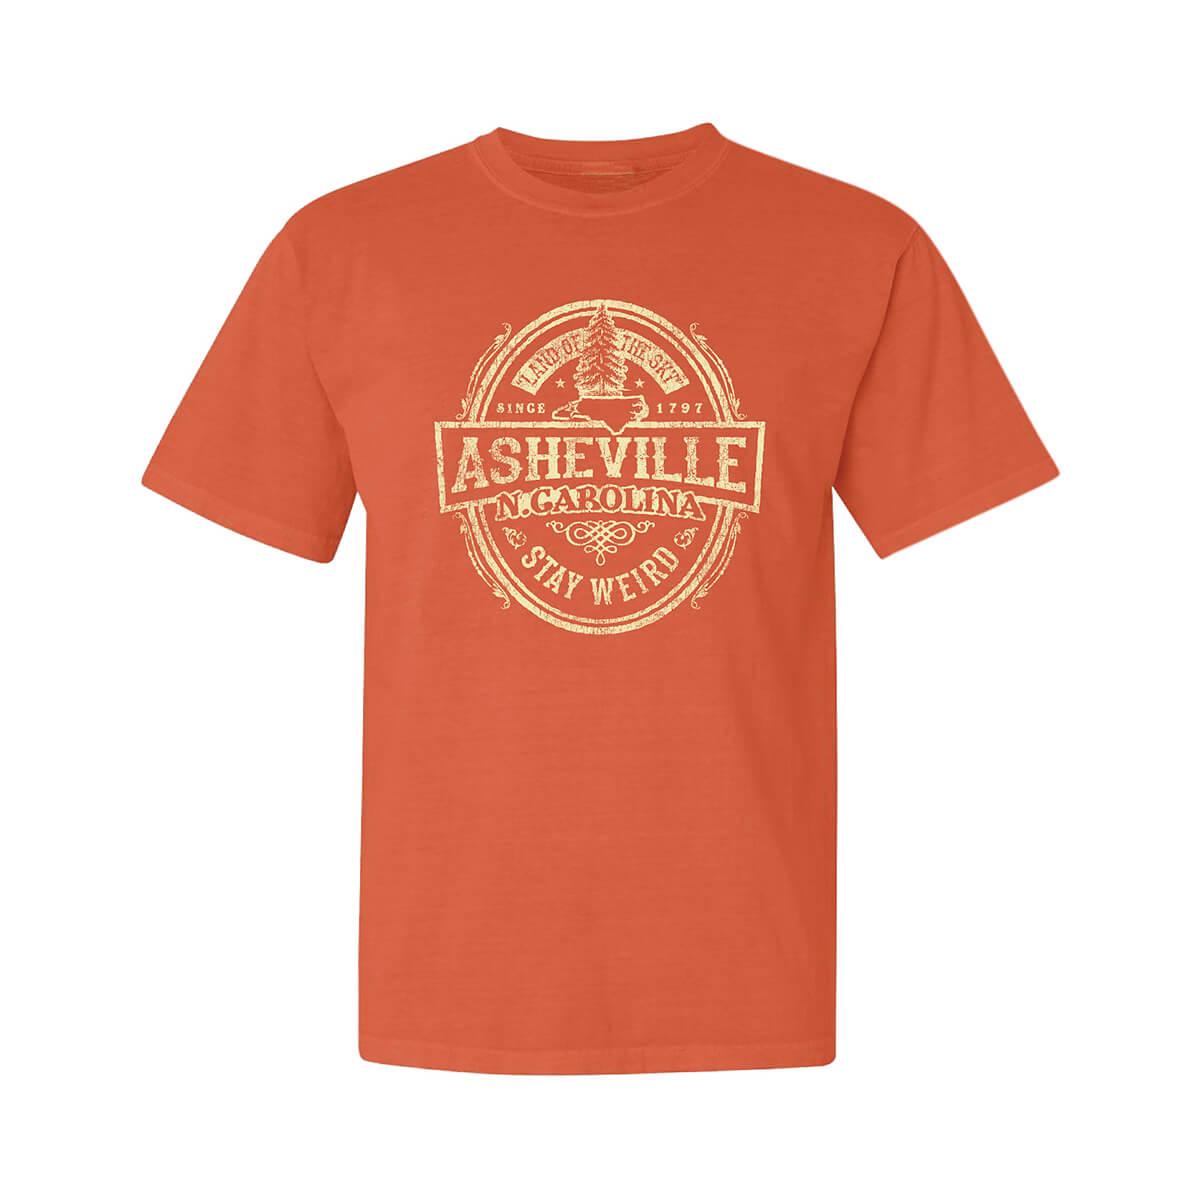  Asheville Land Of The Sky Short Sleeve T- Shirt